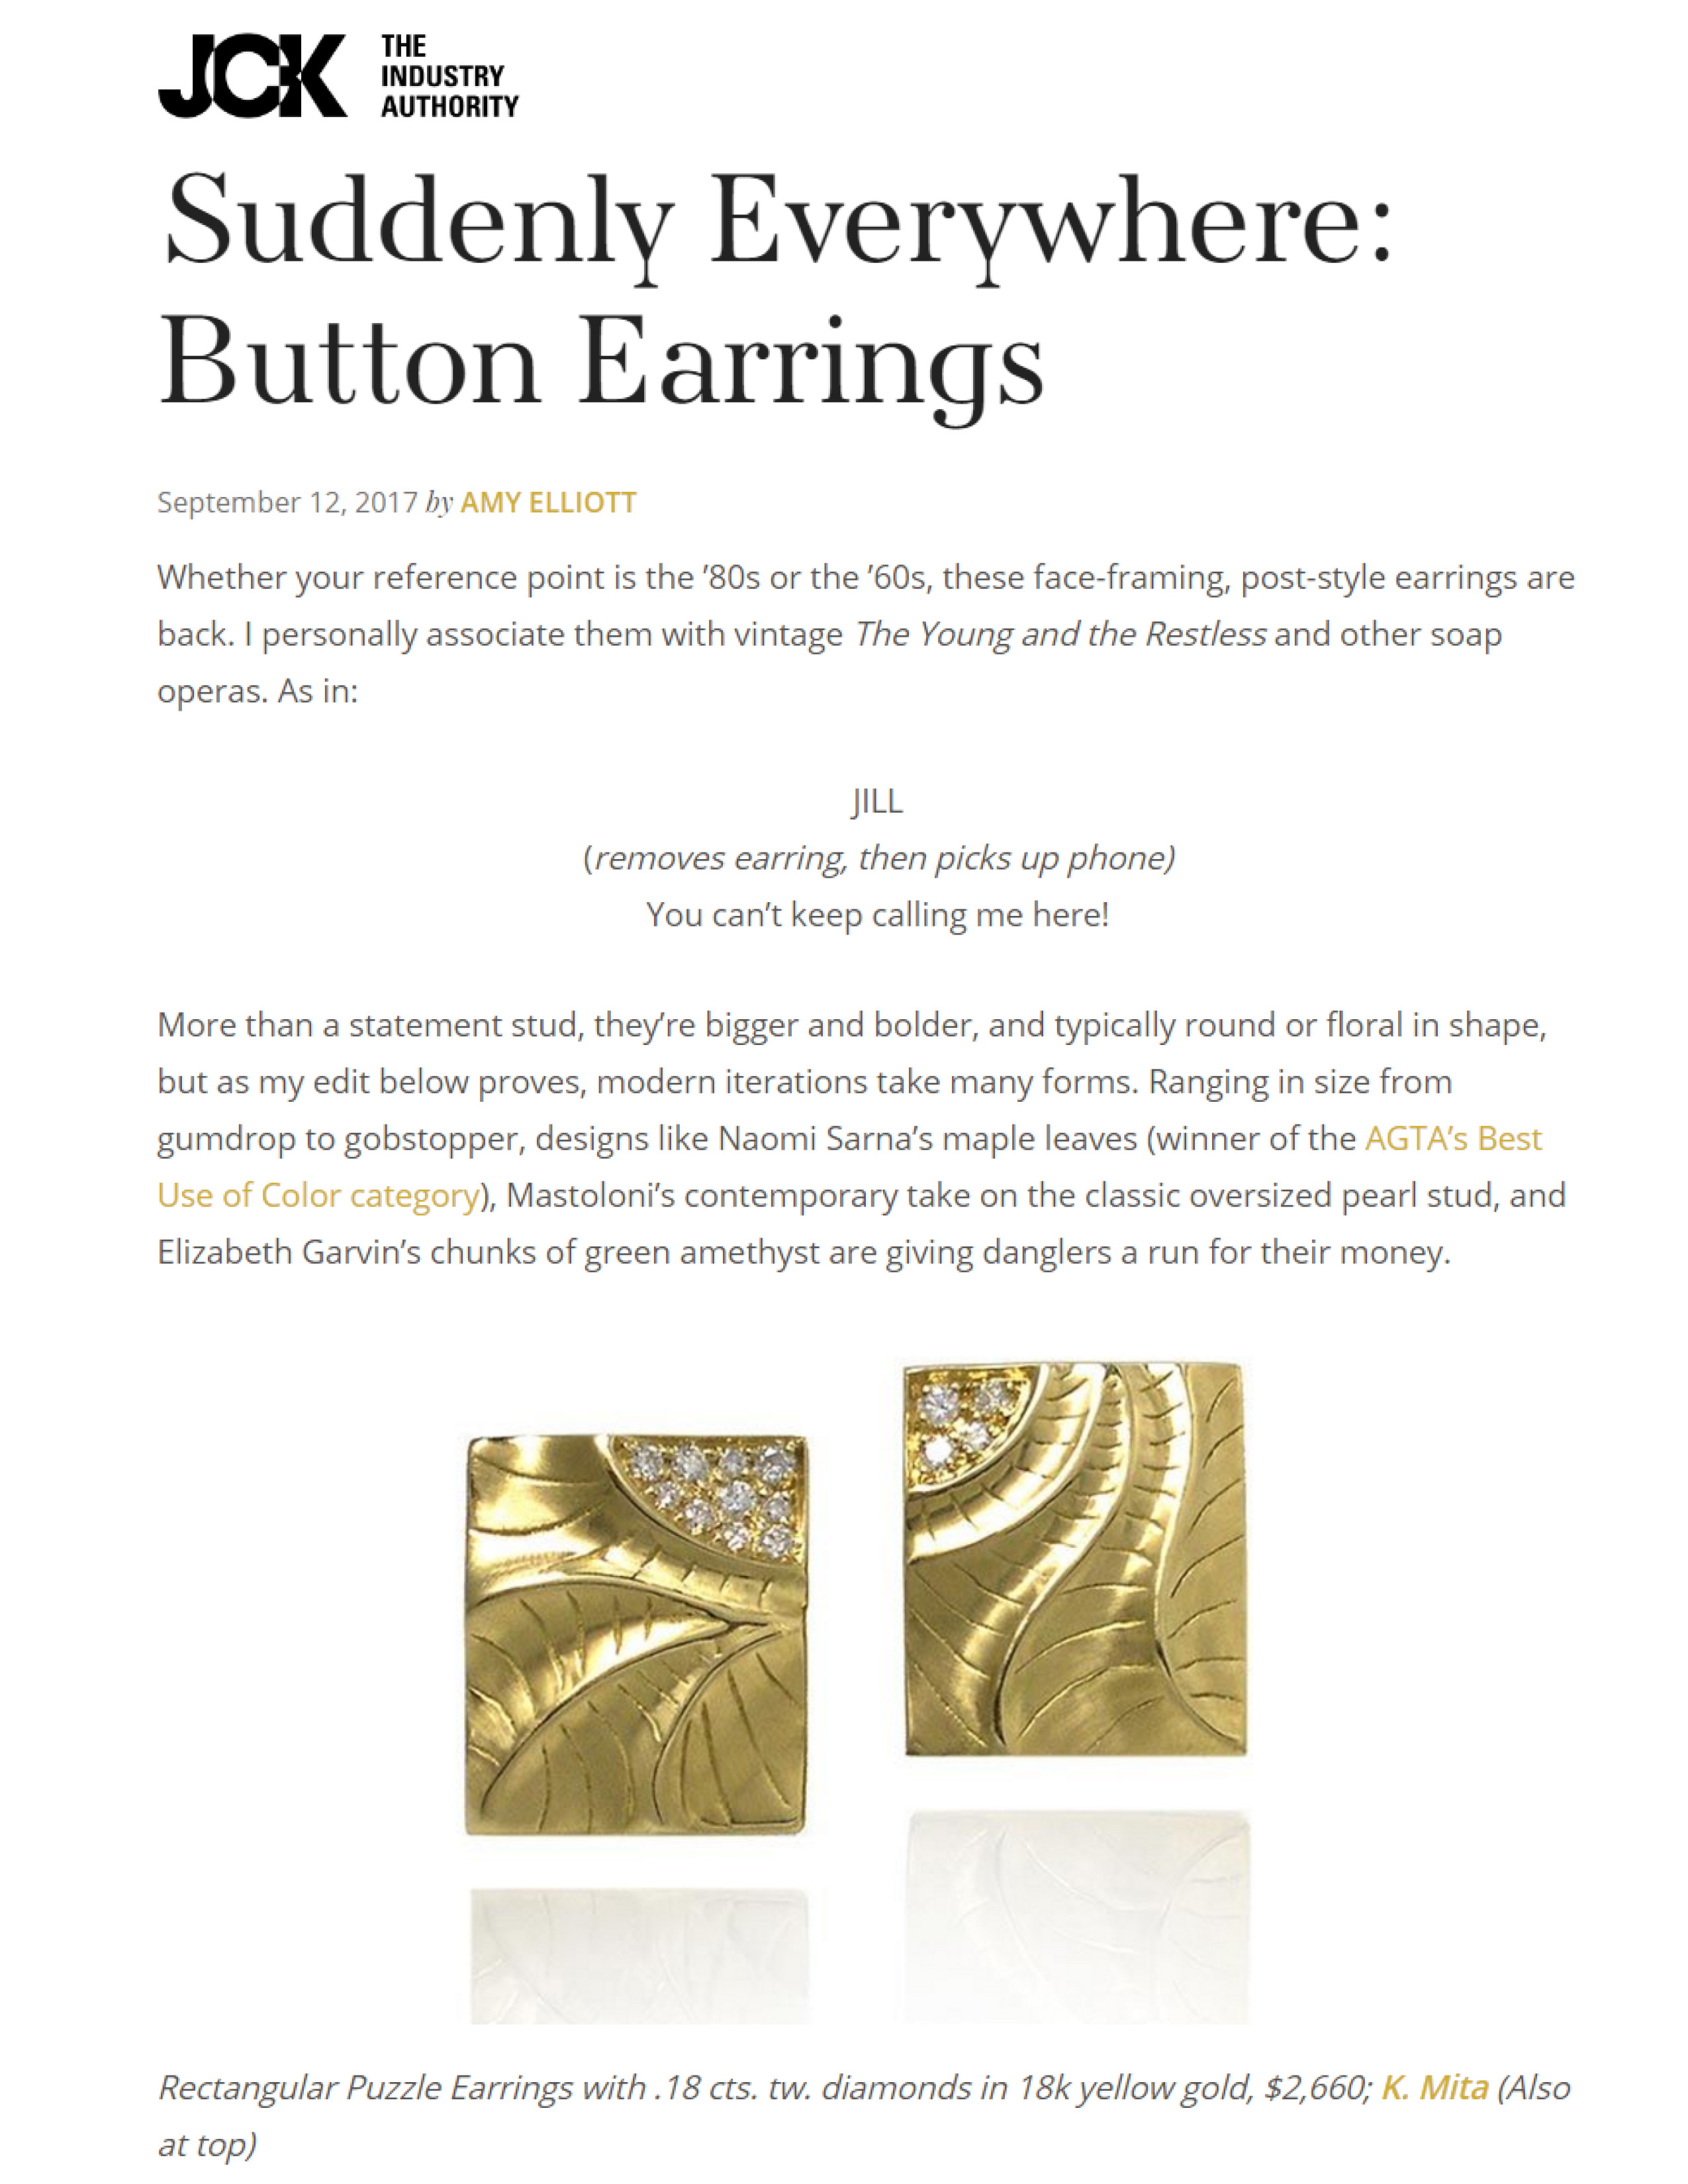 Rectangular Puzzle Earrings by K.Mita | 18k Yellow Gold and Diamonds | jckonline.com September 2017